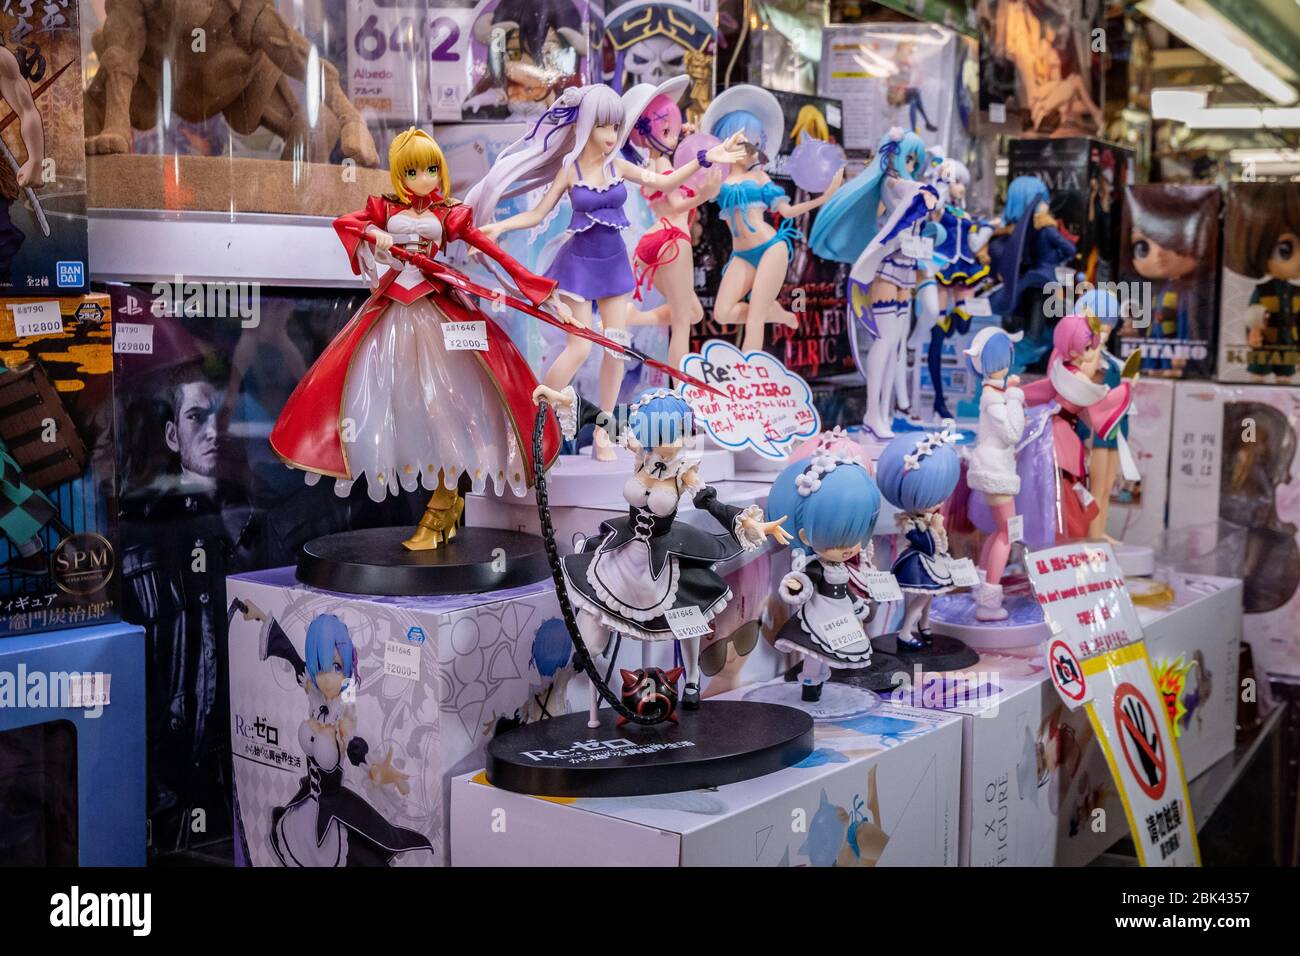 Anime figures, Anime figurines, Awesome anime